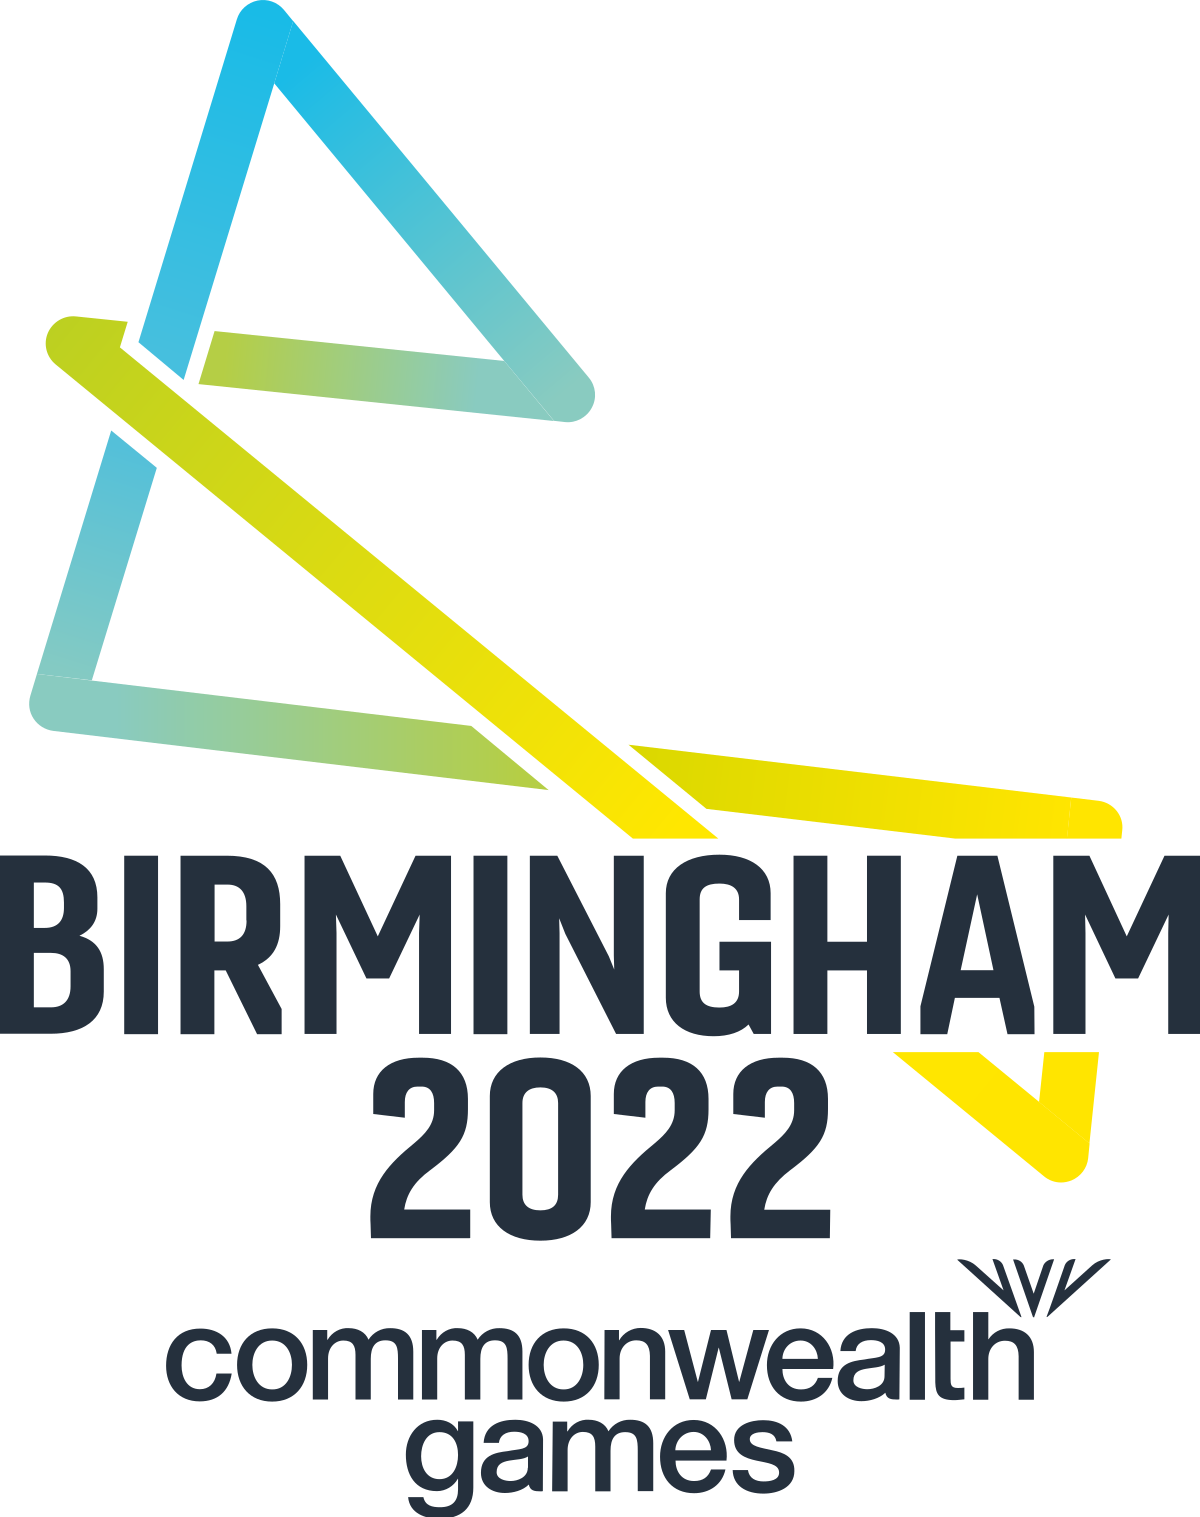 Birmingham_2022_Commonwealth_Games_logo.svg.png